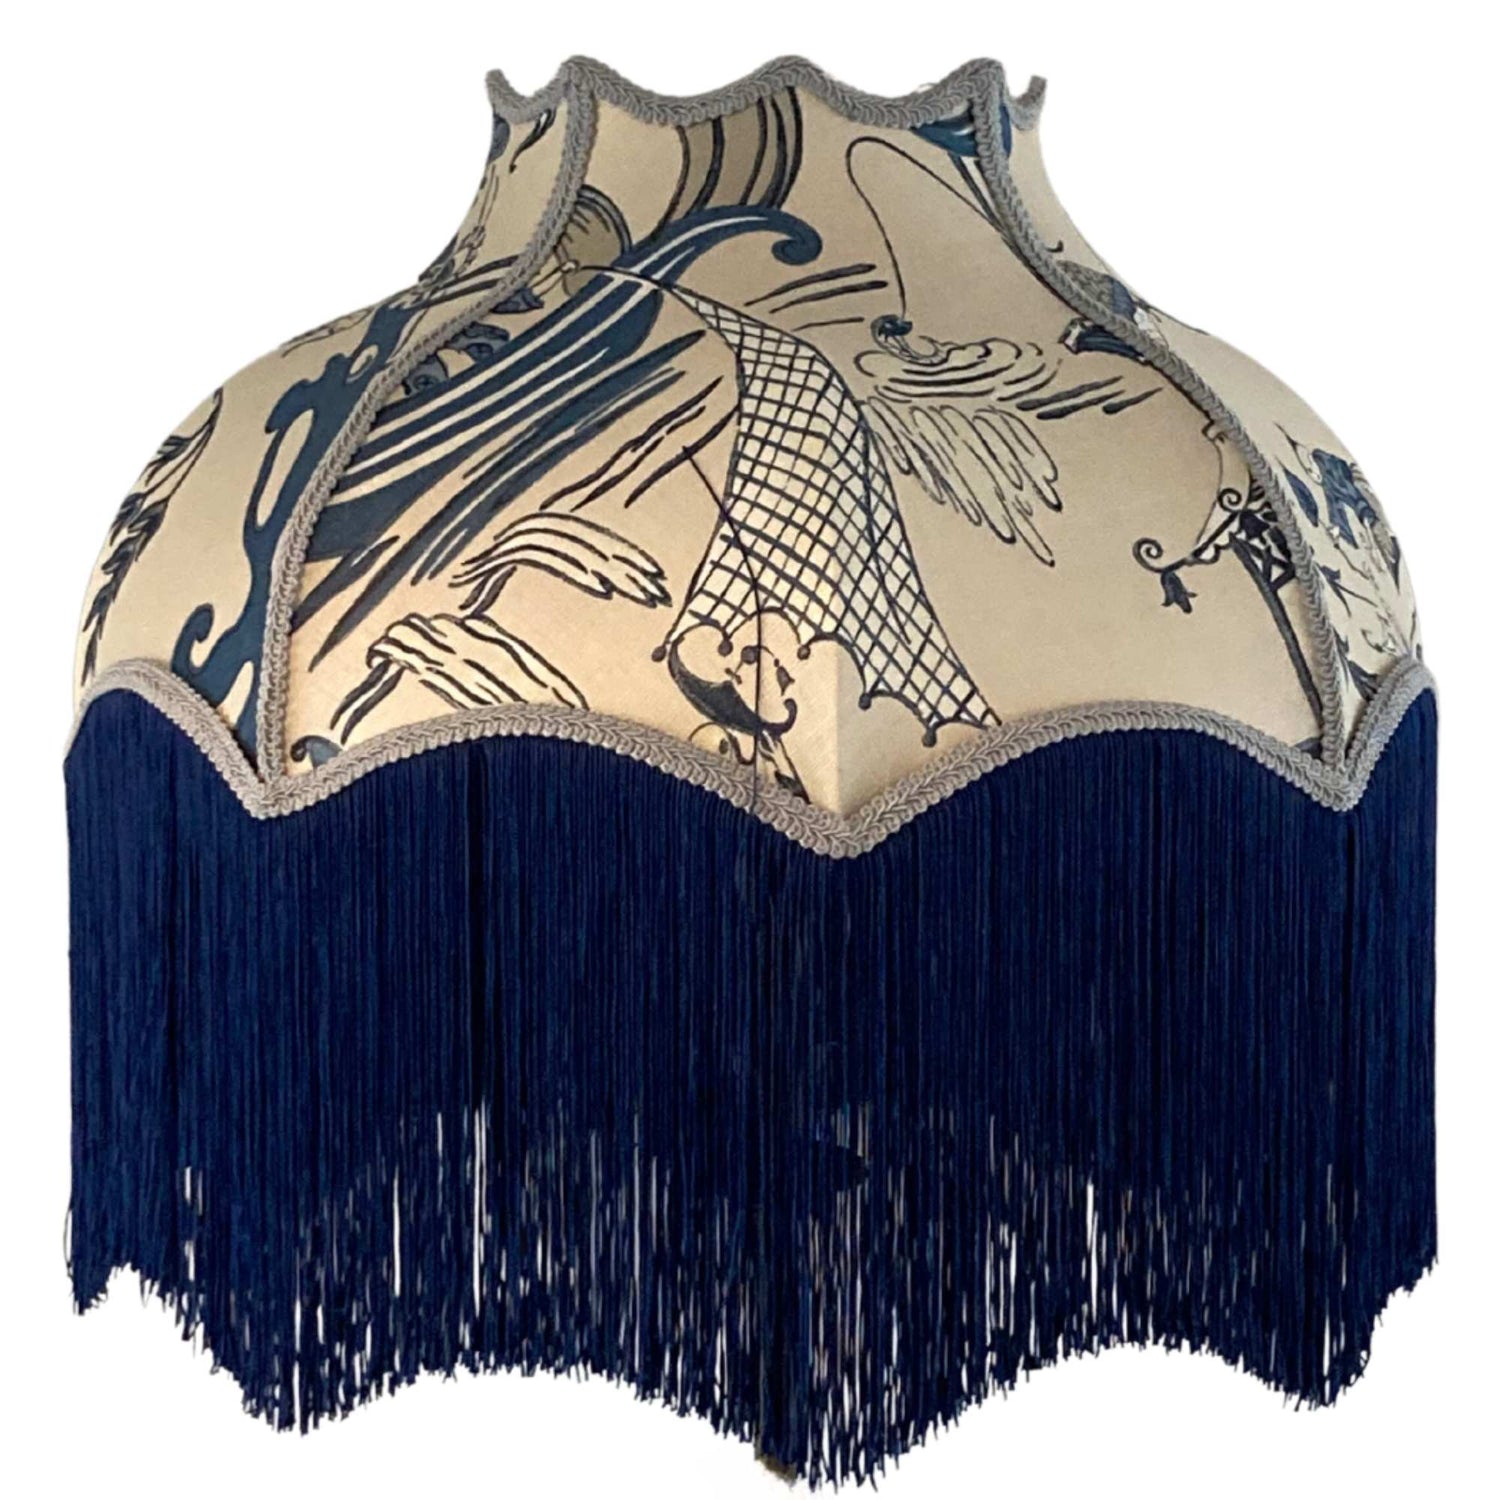 ornate vintage style lampshade with deep navy blue fringe